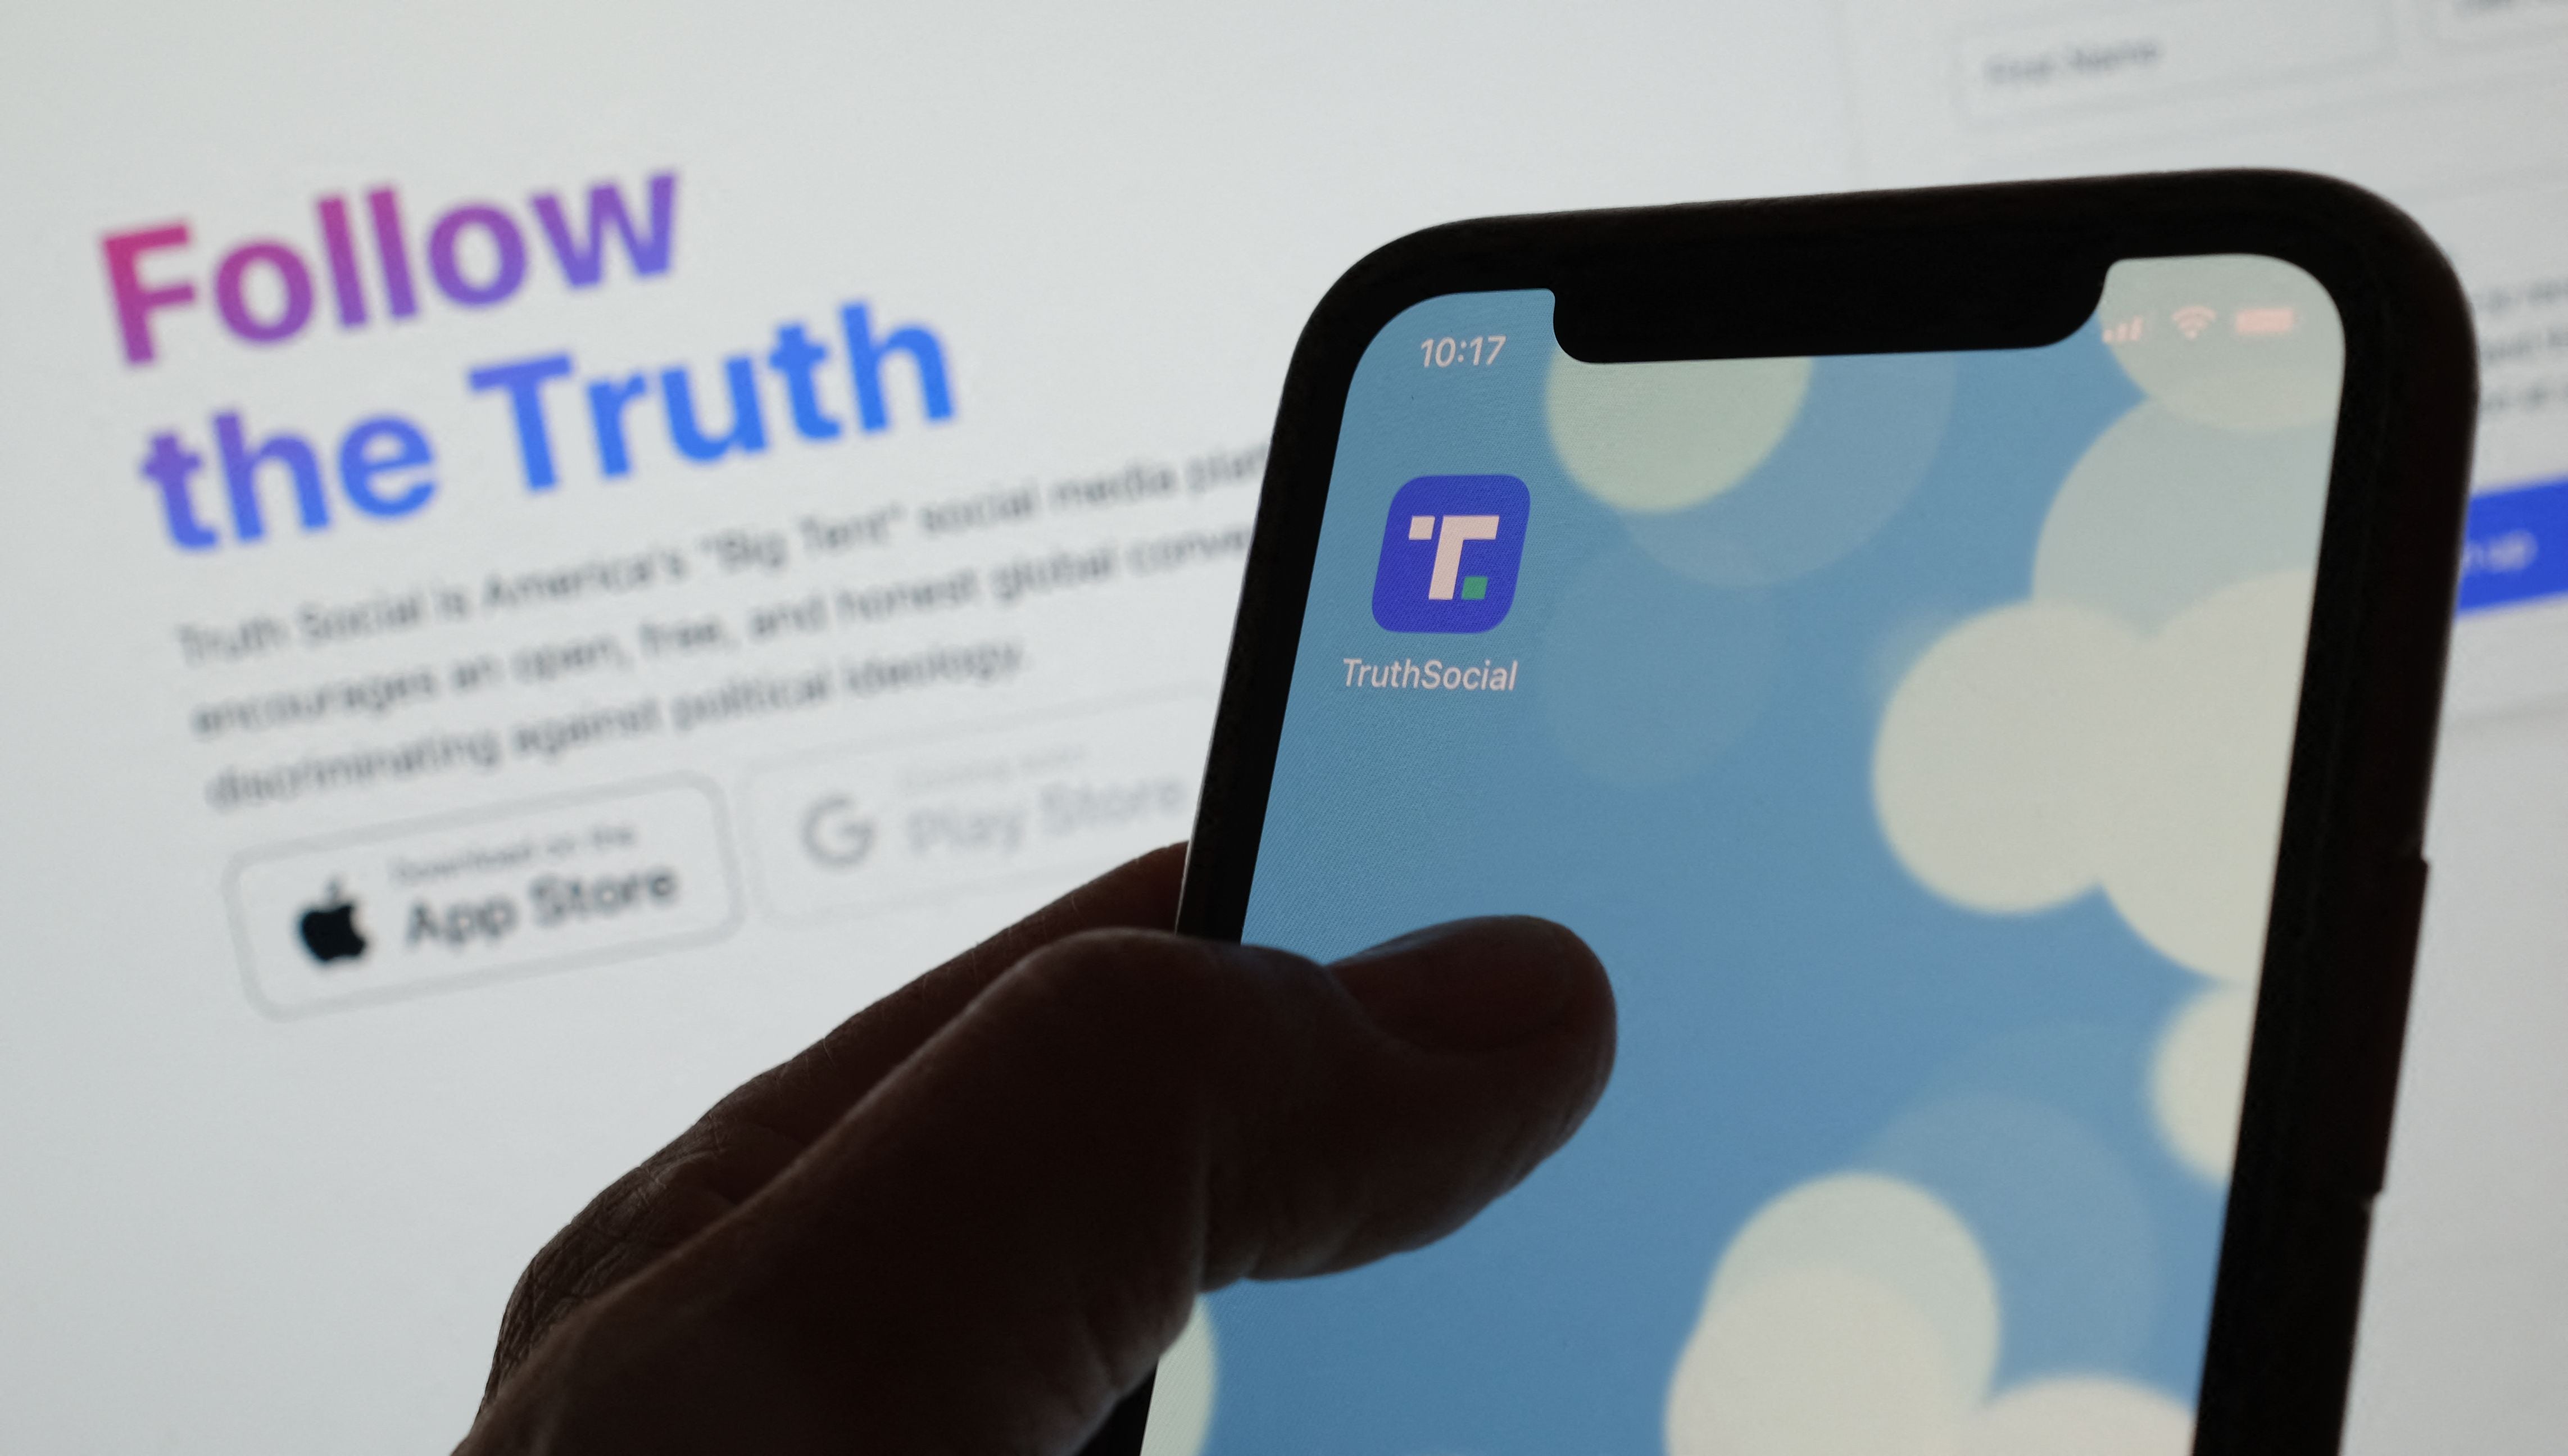 Donald Trump’s social media app Truth Social’s logo on a smartphone in February 2022